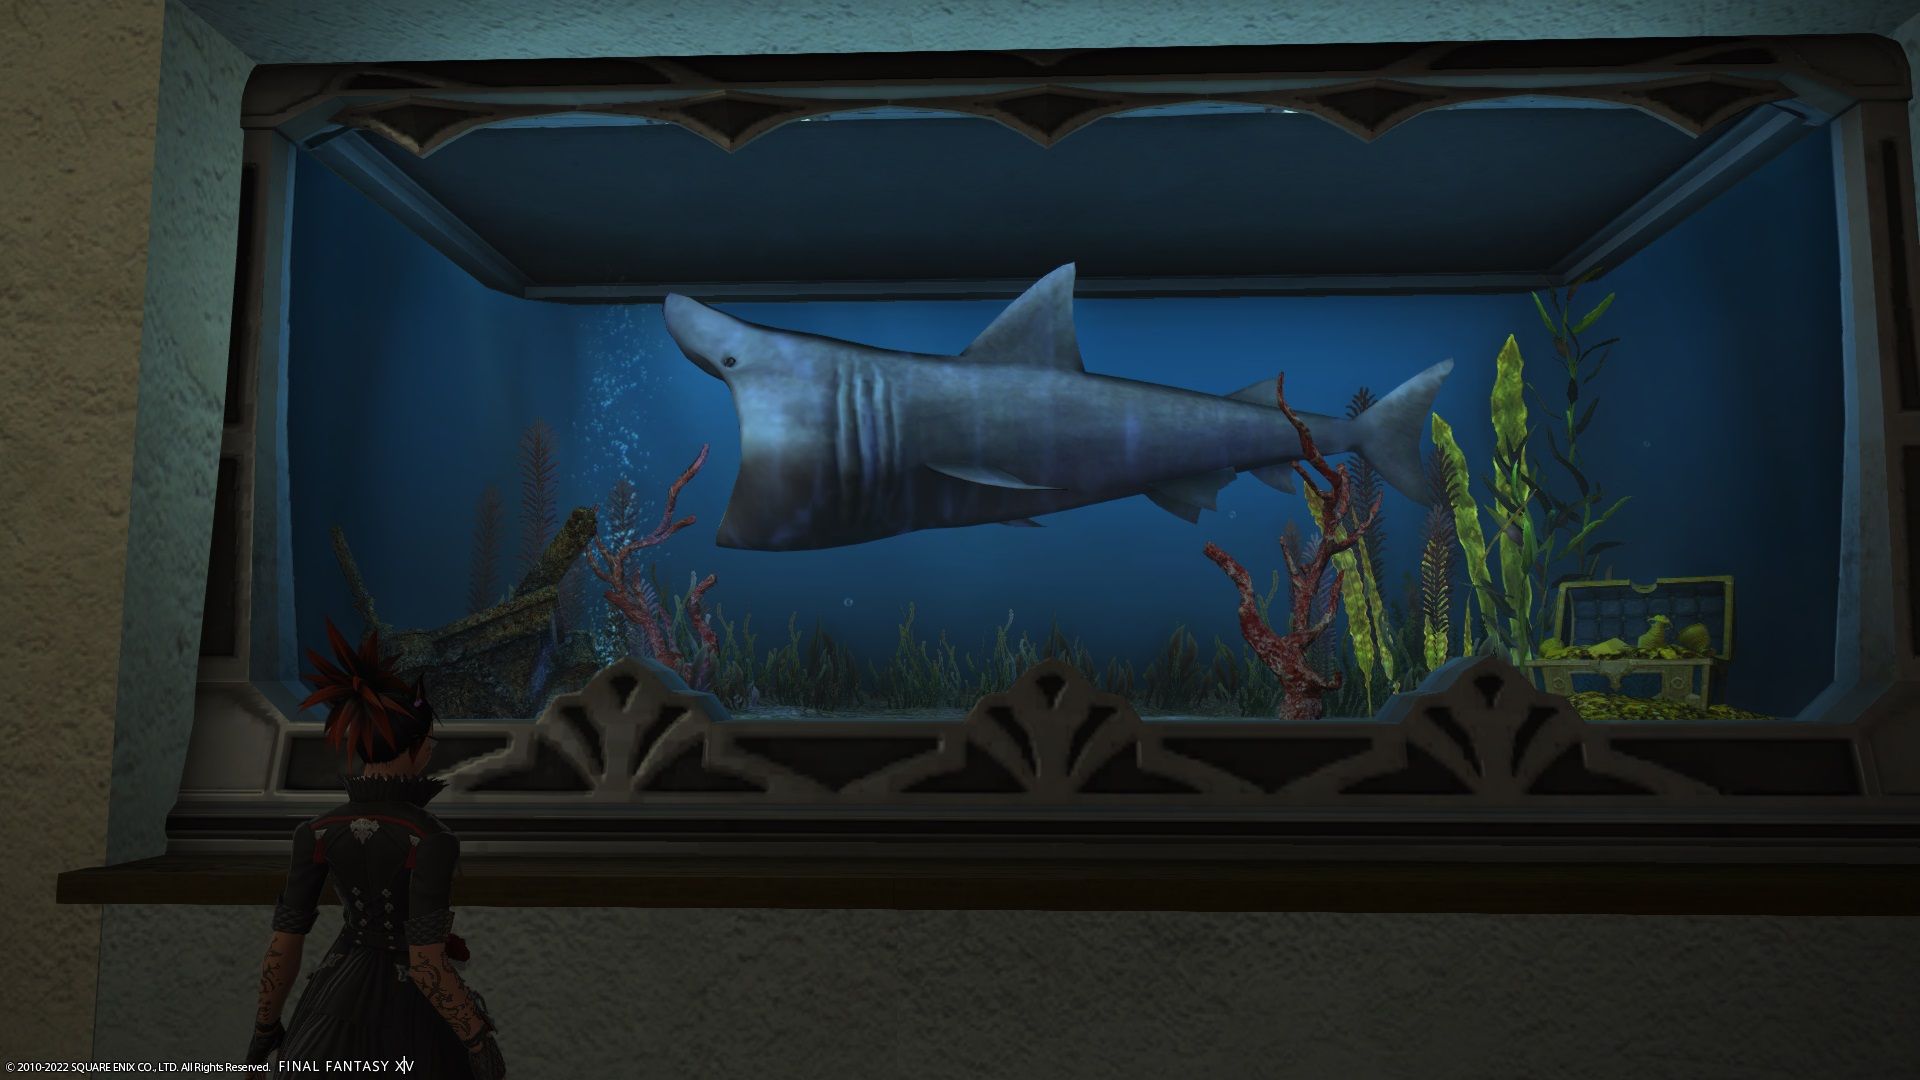 FF14 Eorzean Aquarium player looking at basking shark